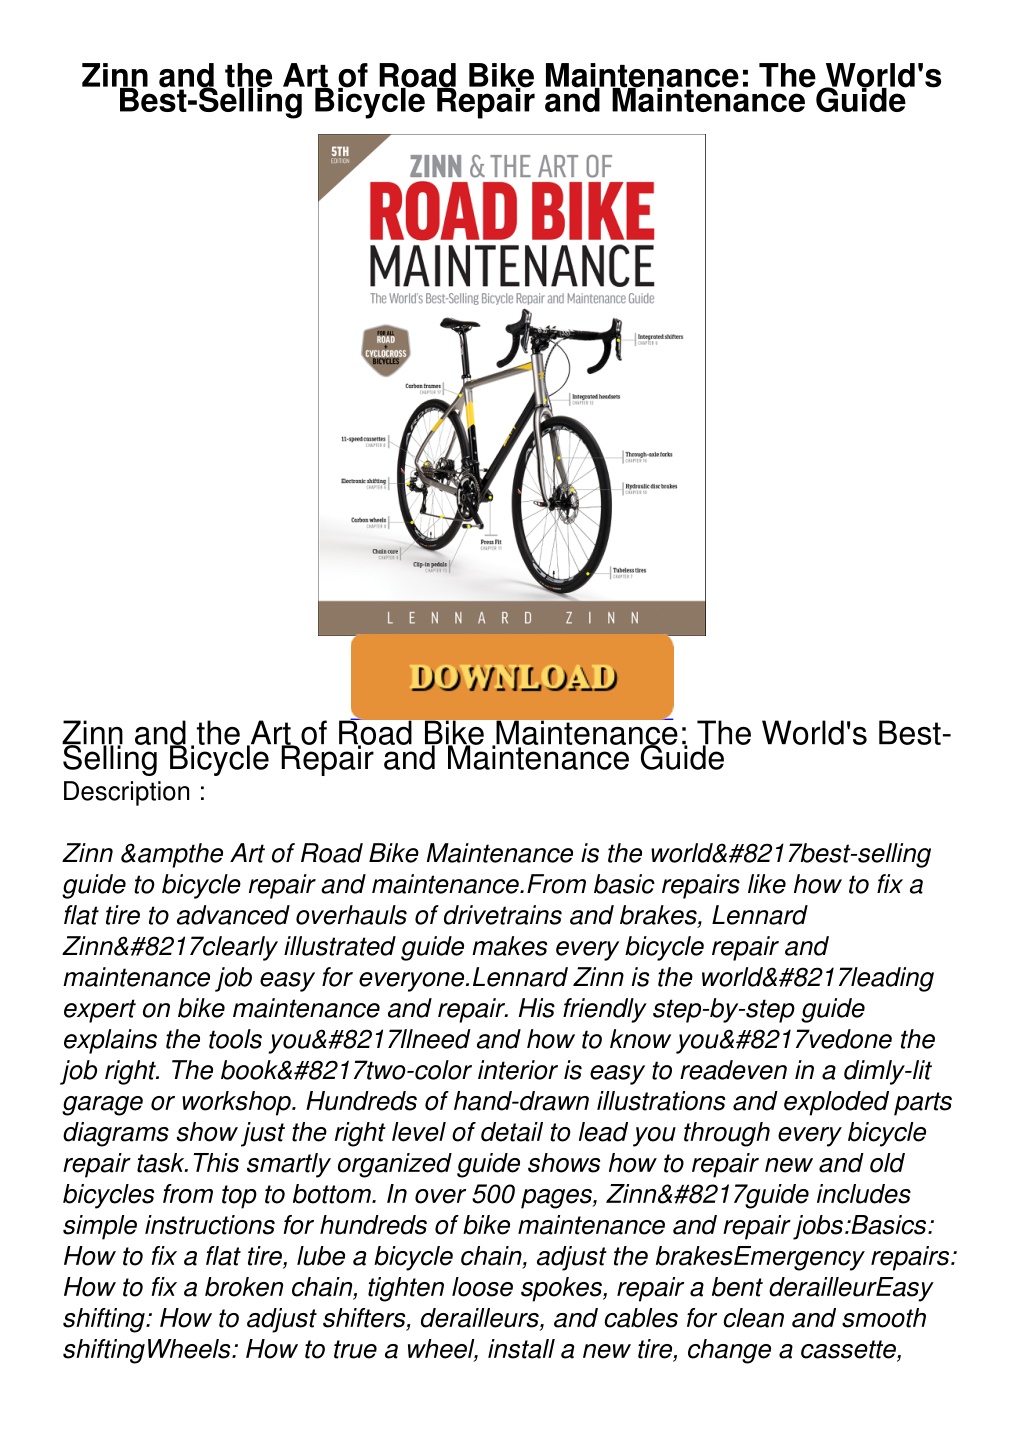 zinn and the art of road bike maintenance l.w